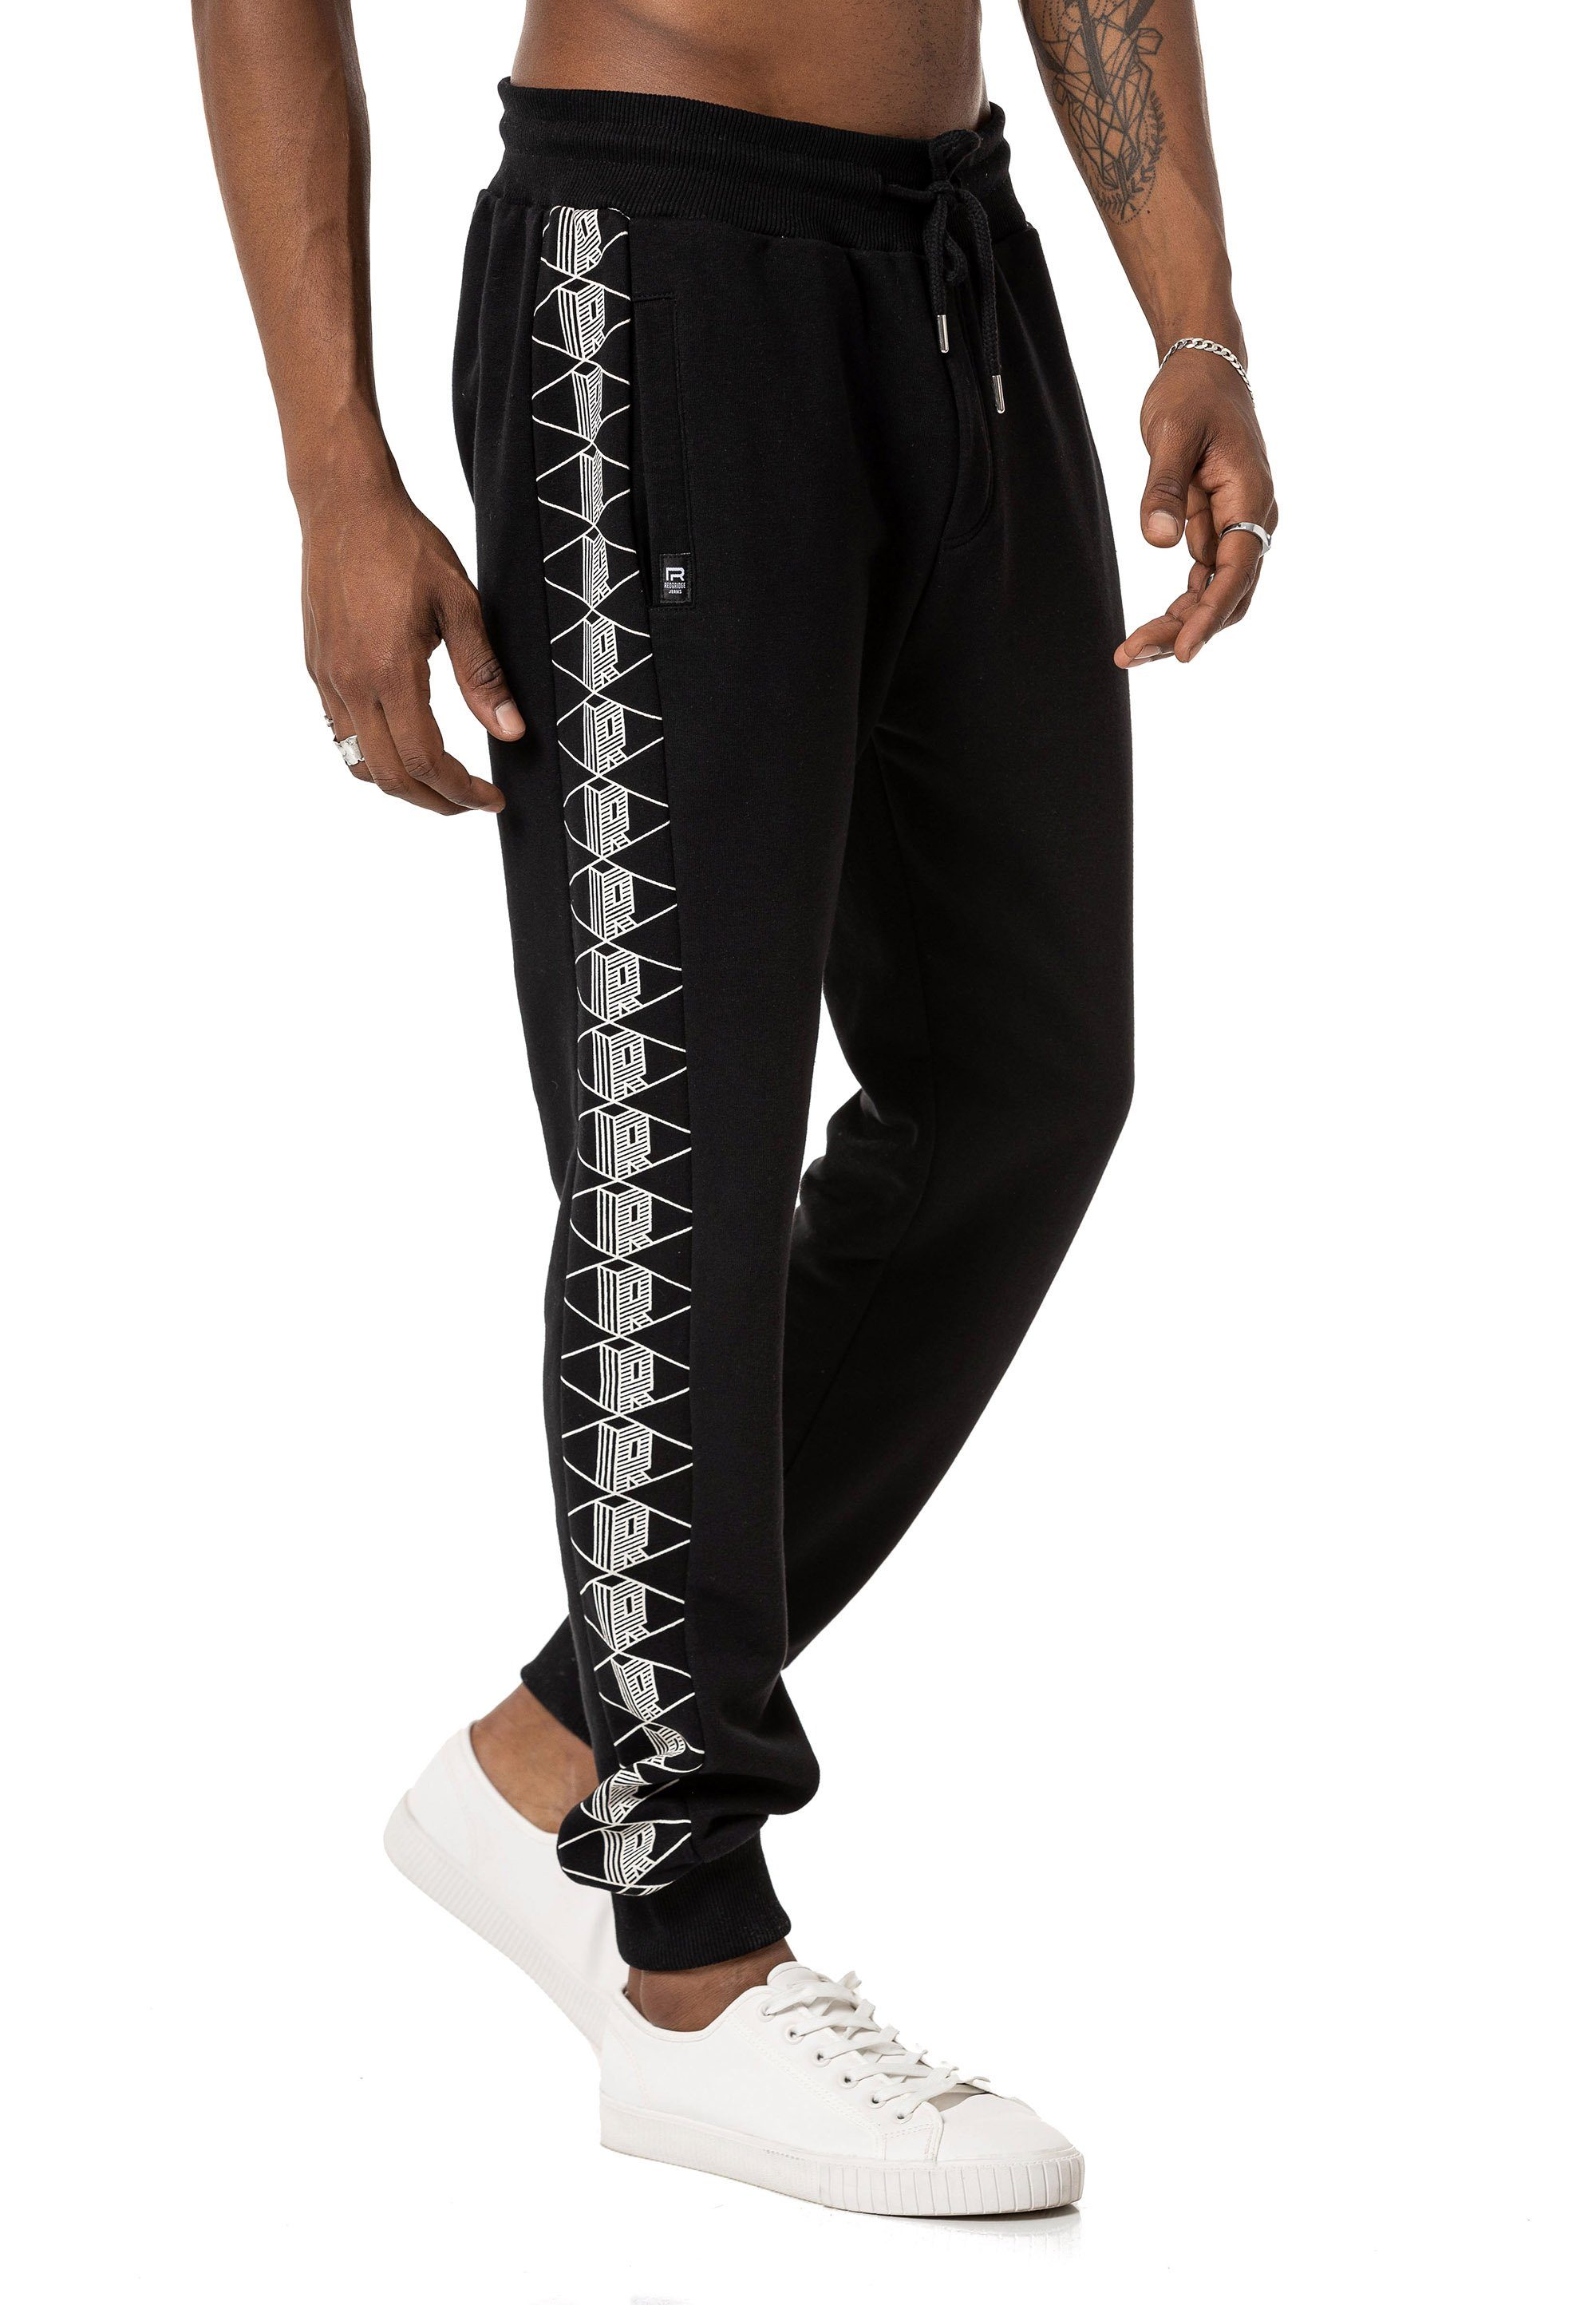 RedBridge Jogginghose Sweatpants mit seitlichem 3D Print Premium Qualität Schwarz | Jogginghosen